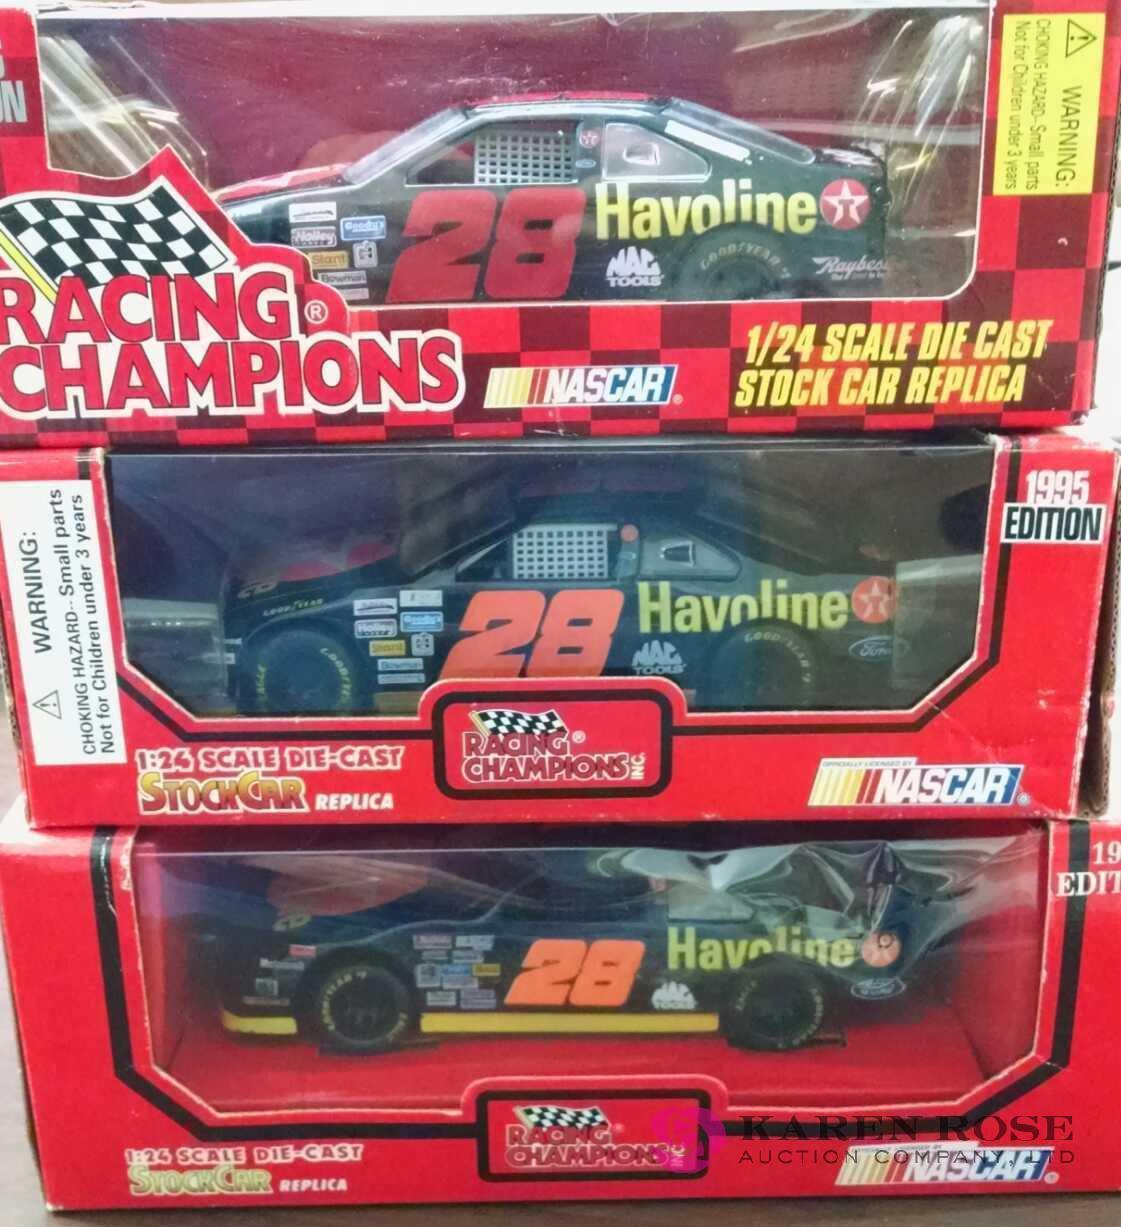 Three 1/24th scale diecast Havoline NASCARs